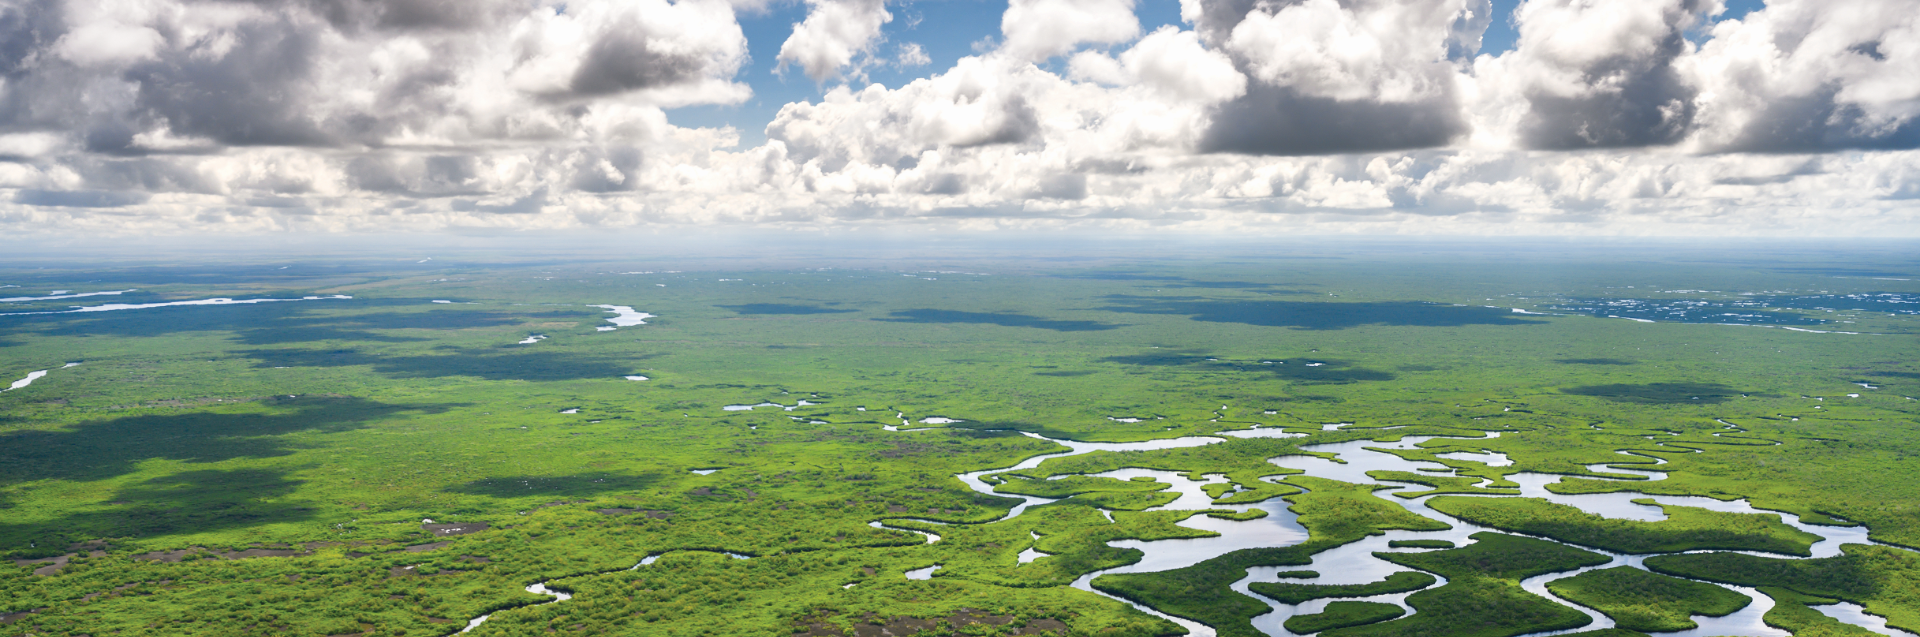 Aerial of Florida Everglades